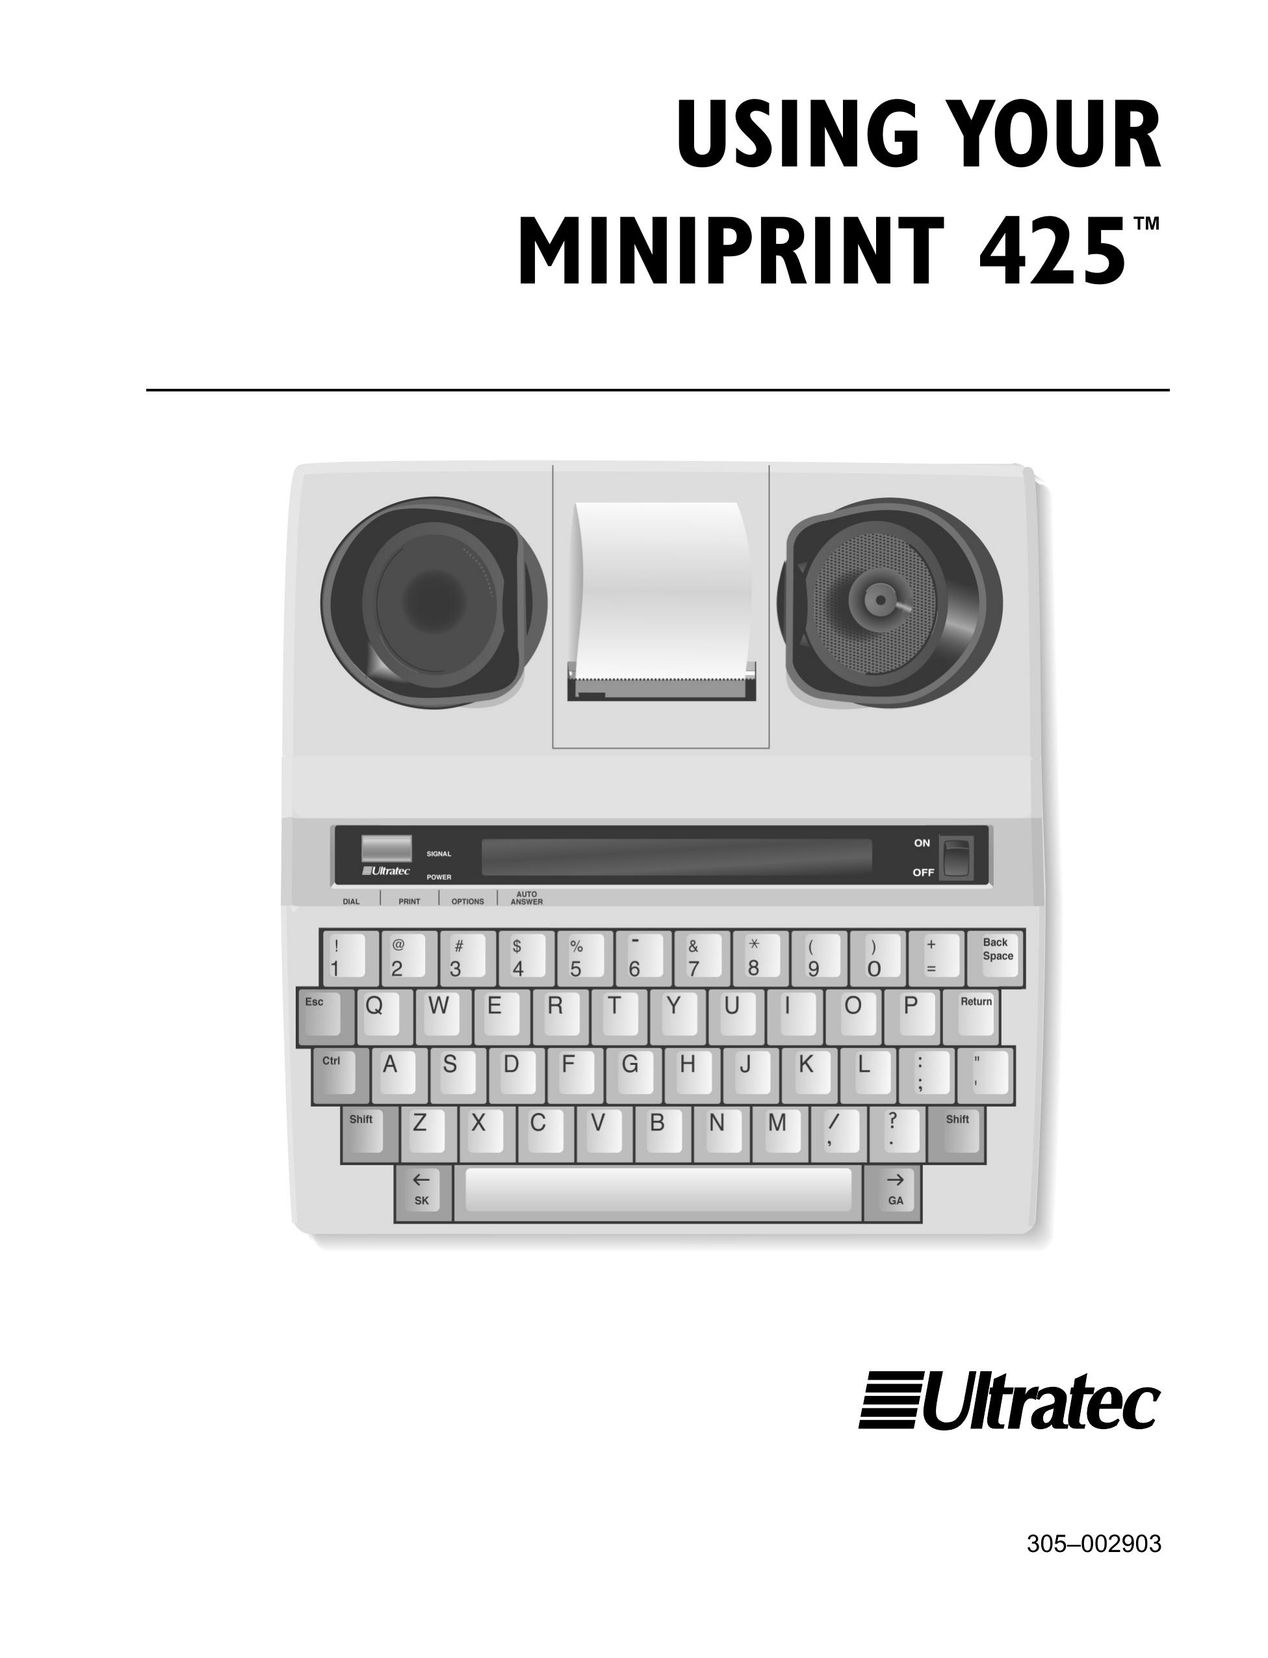 Ultratec Miniprint 425 Telephone User Manual